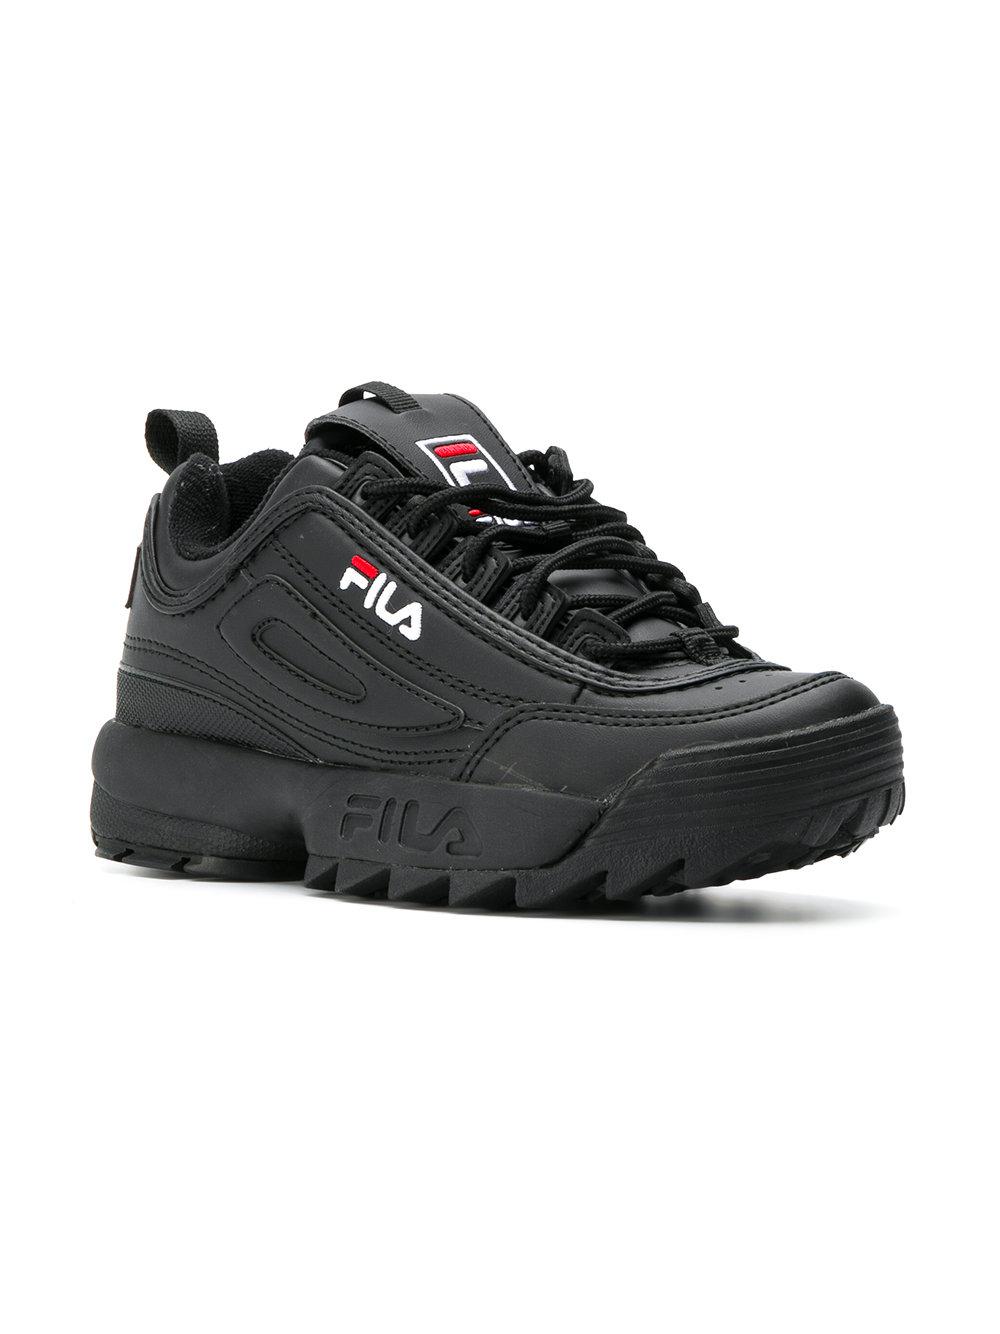 Fila Disruptor Low Sneakers in Black for Men - Lyst